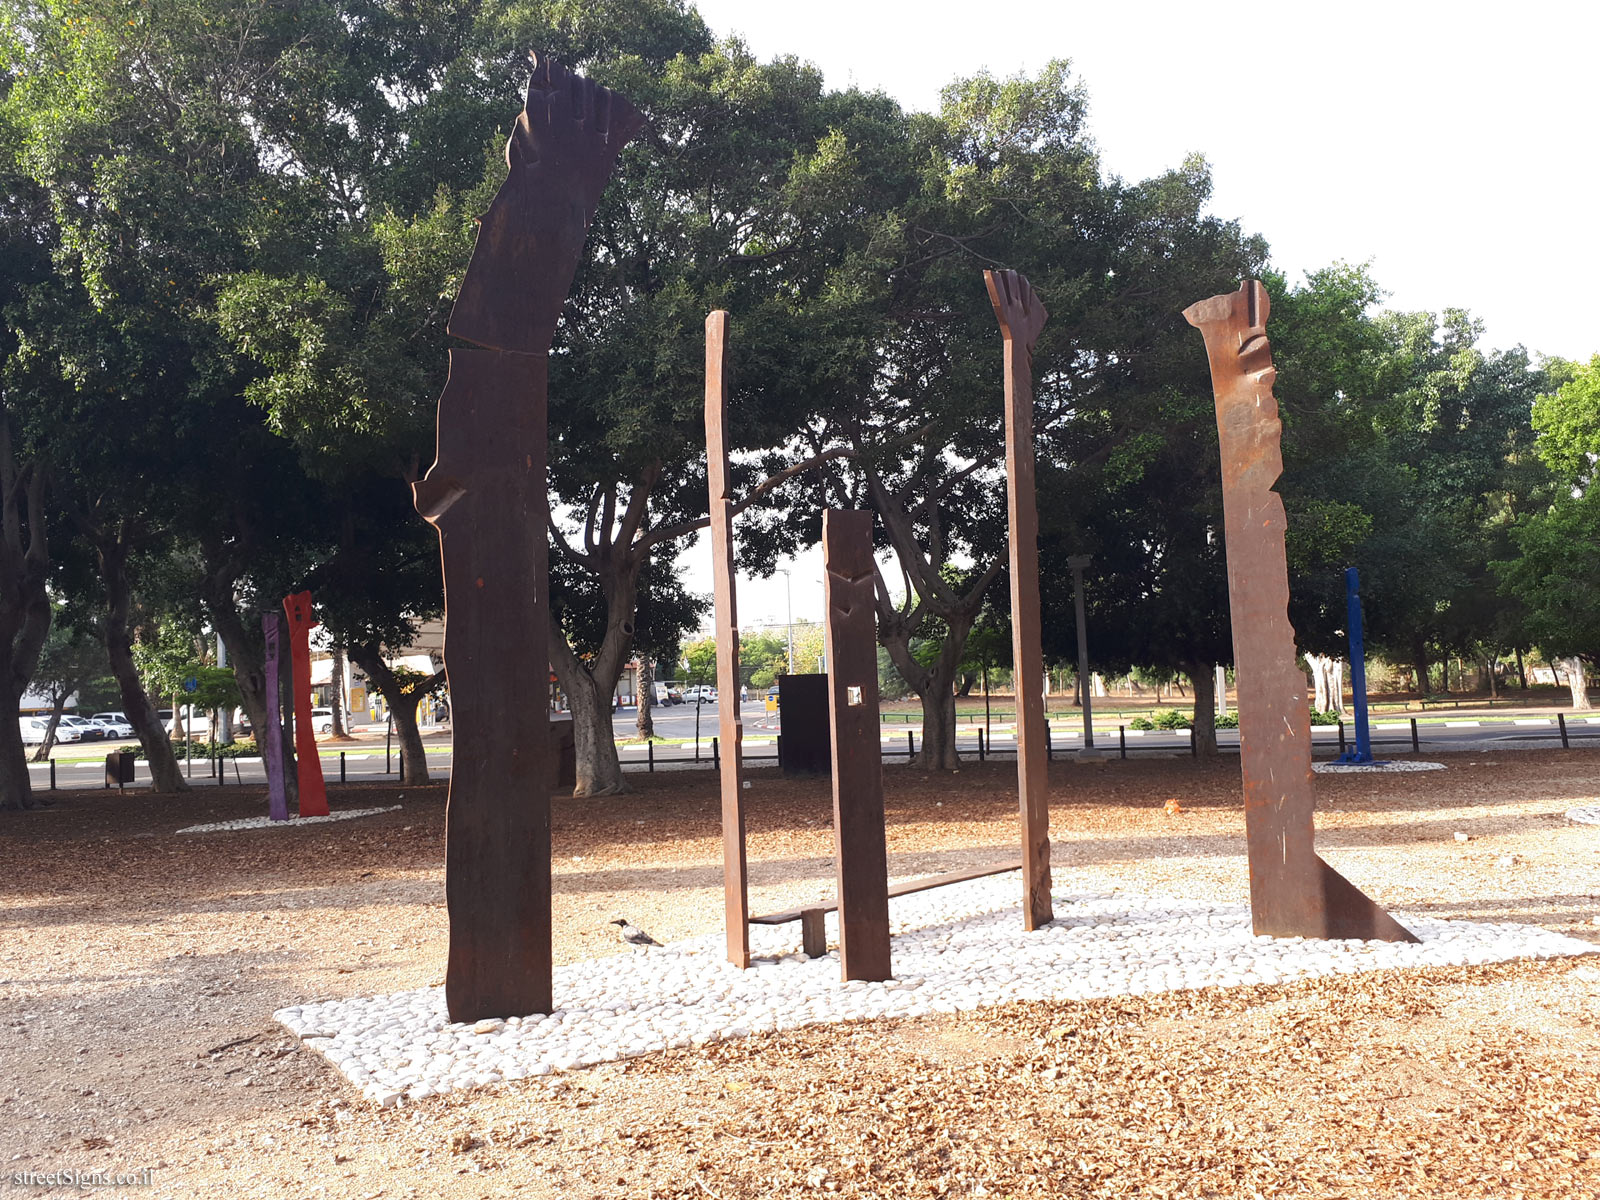 Tel Aviv - Tomarkin sculptures at %27%